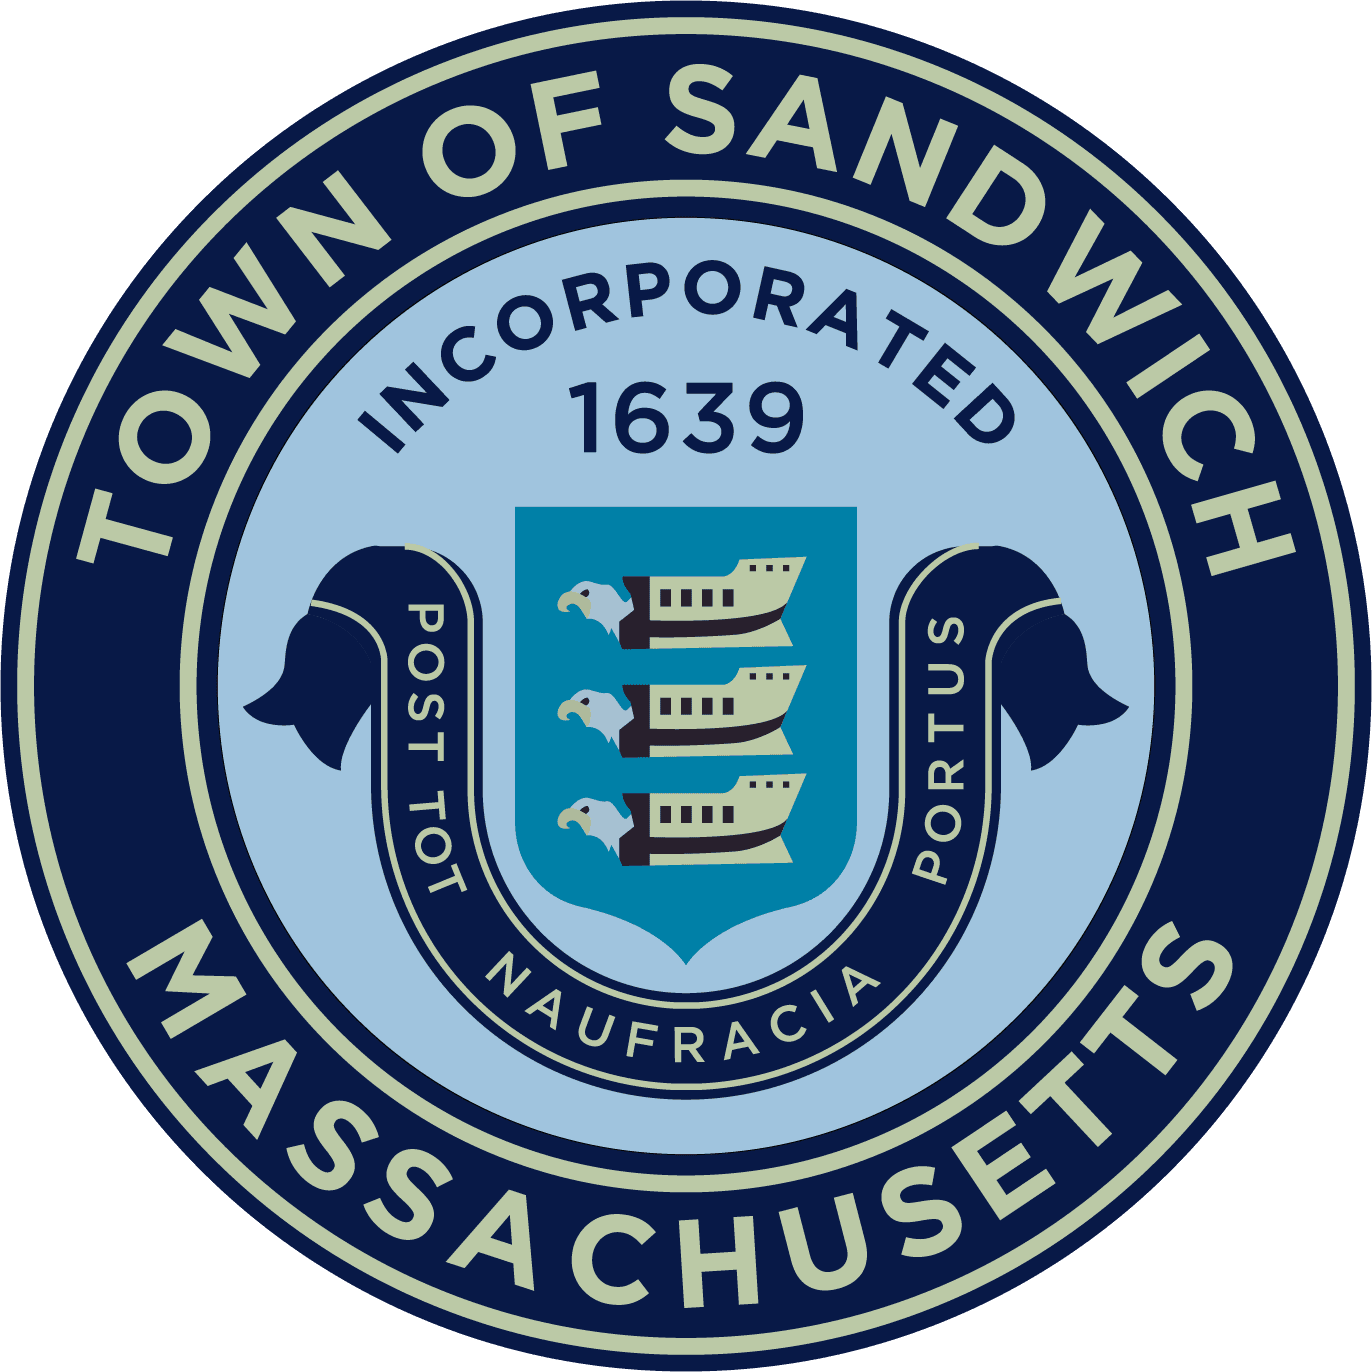 Sandwich Town Seal